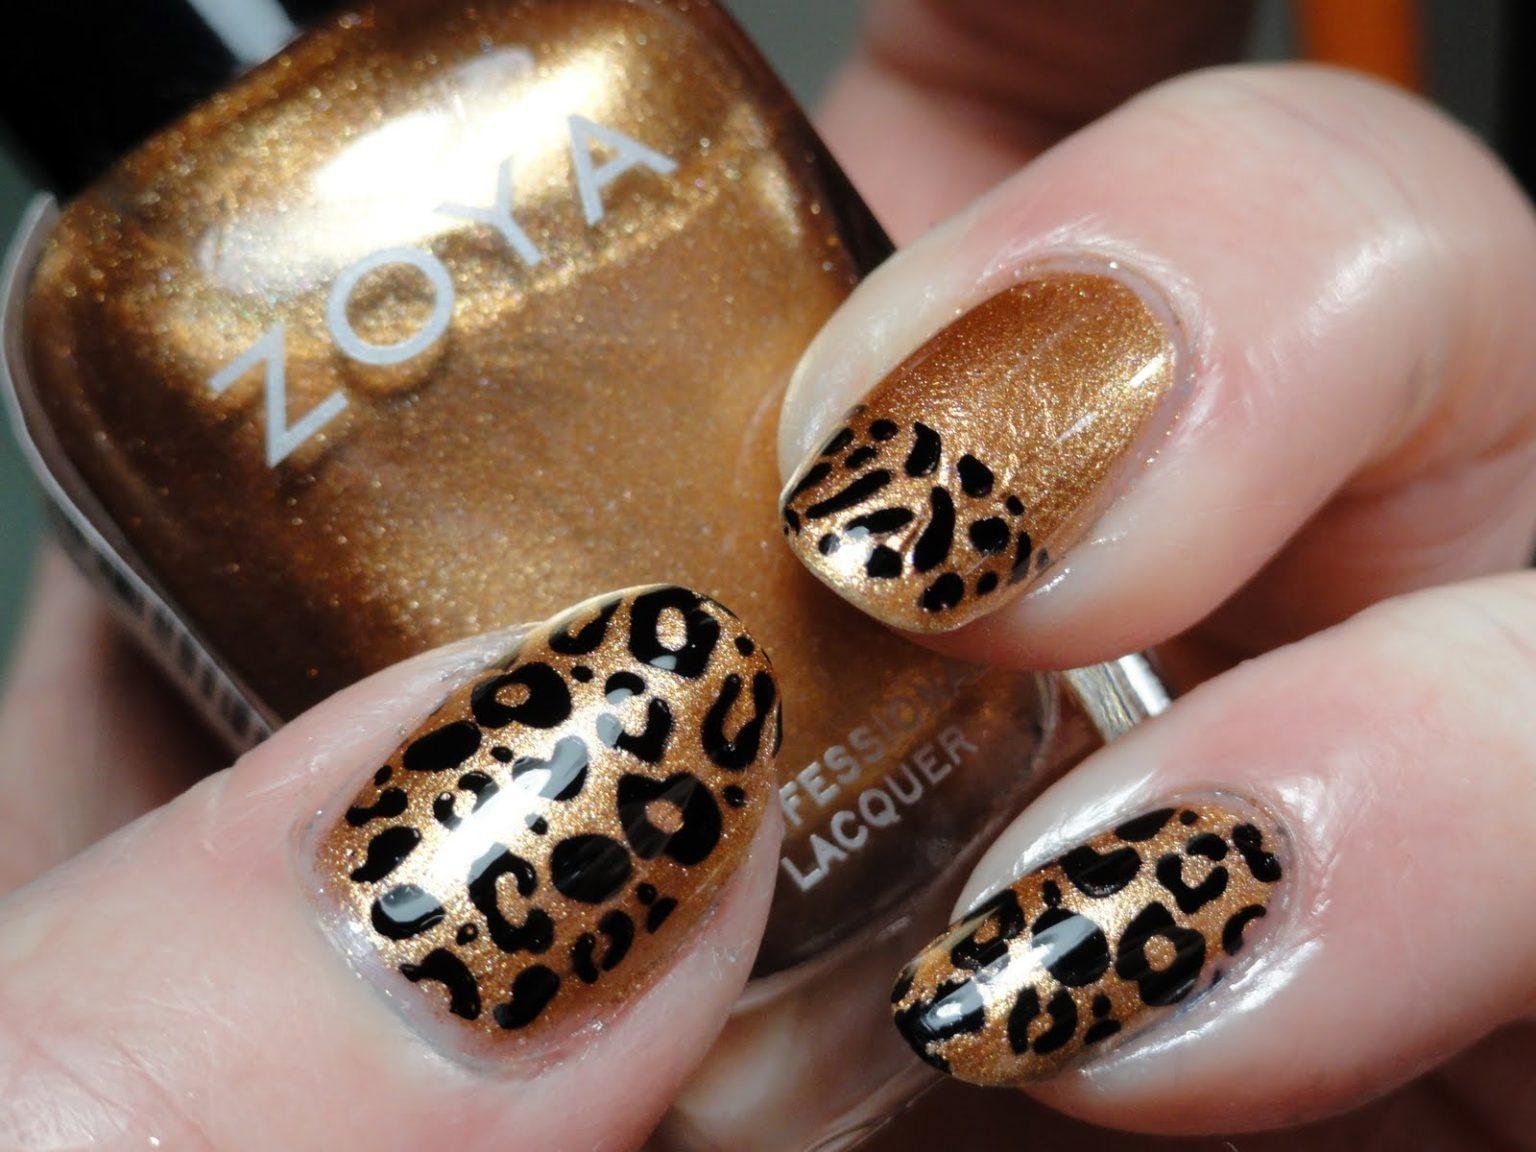 Леопардовые Ногти Фото